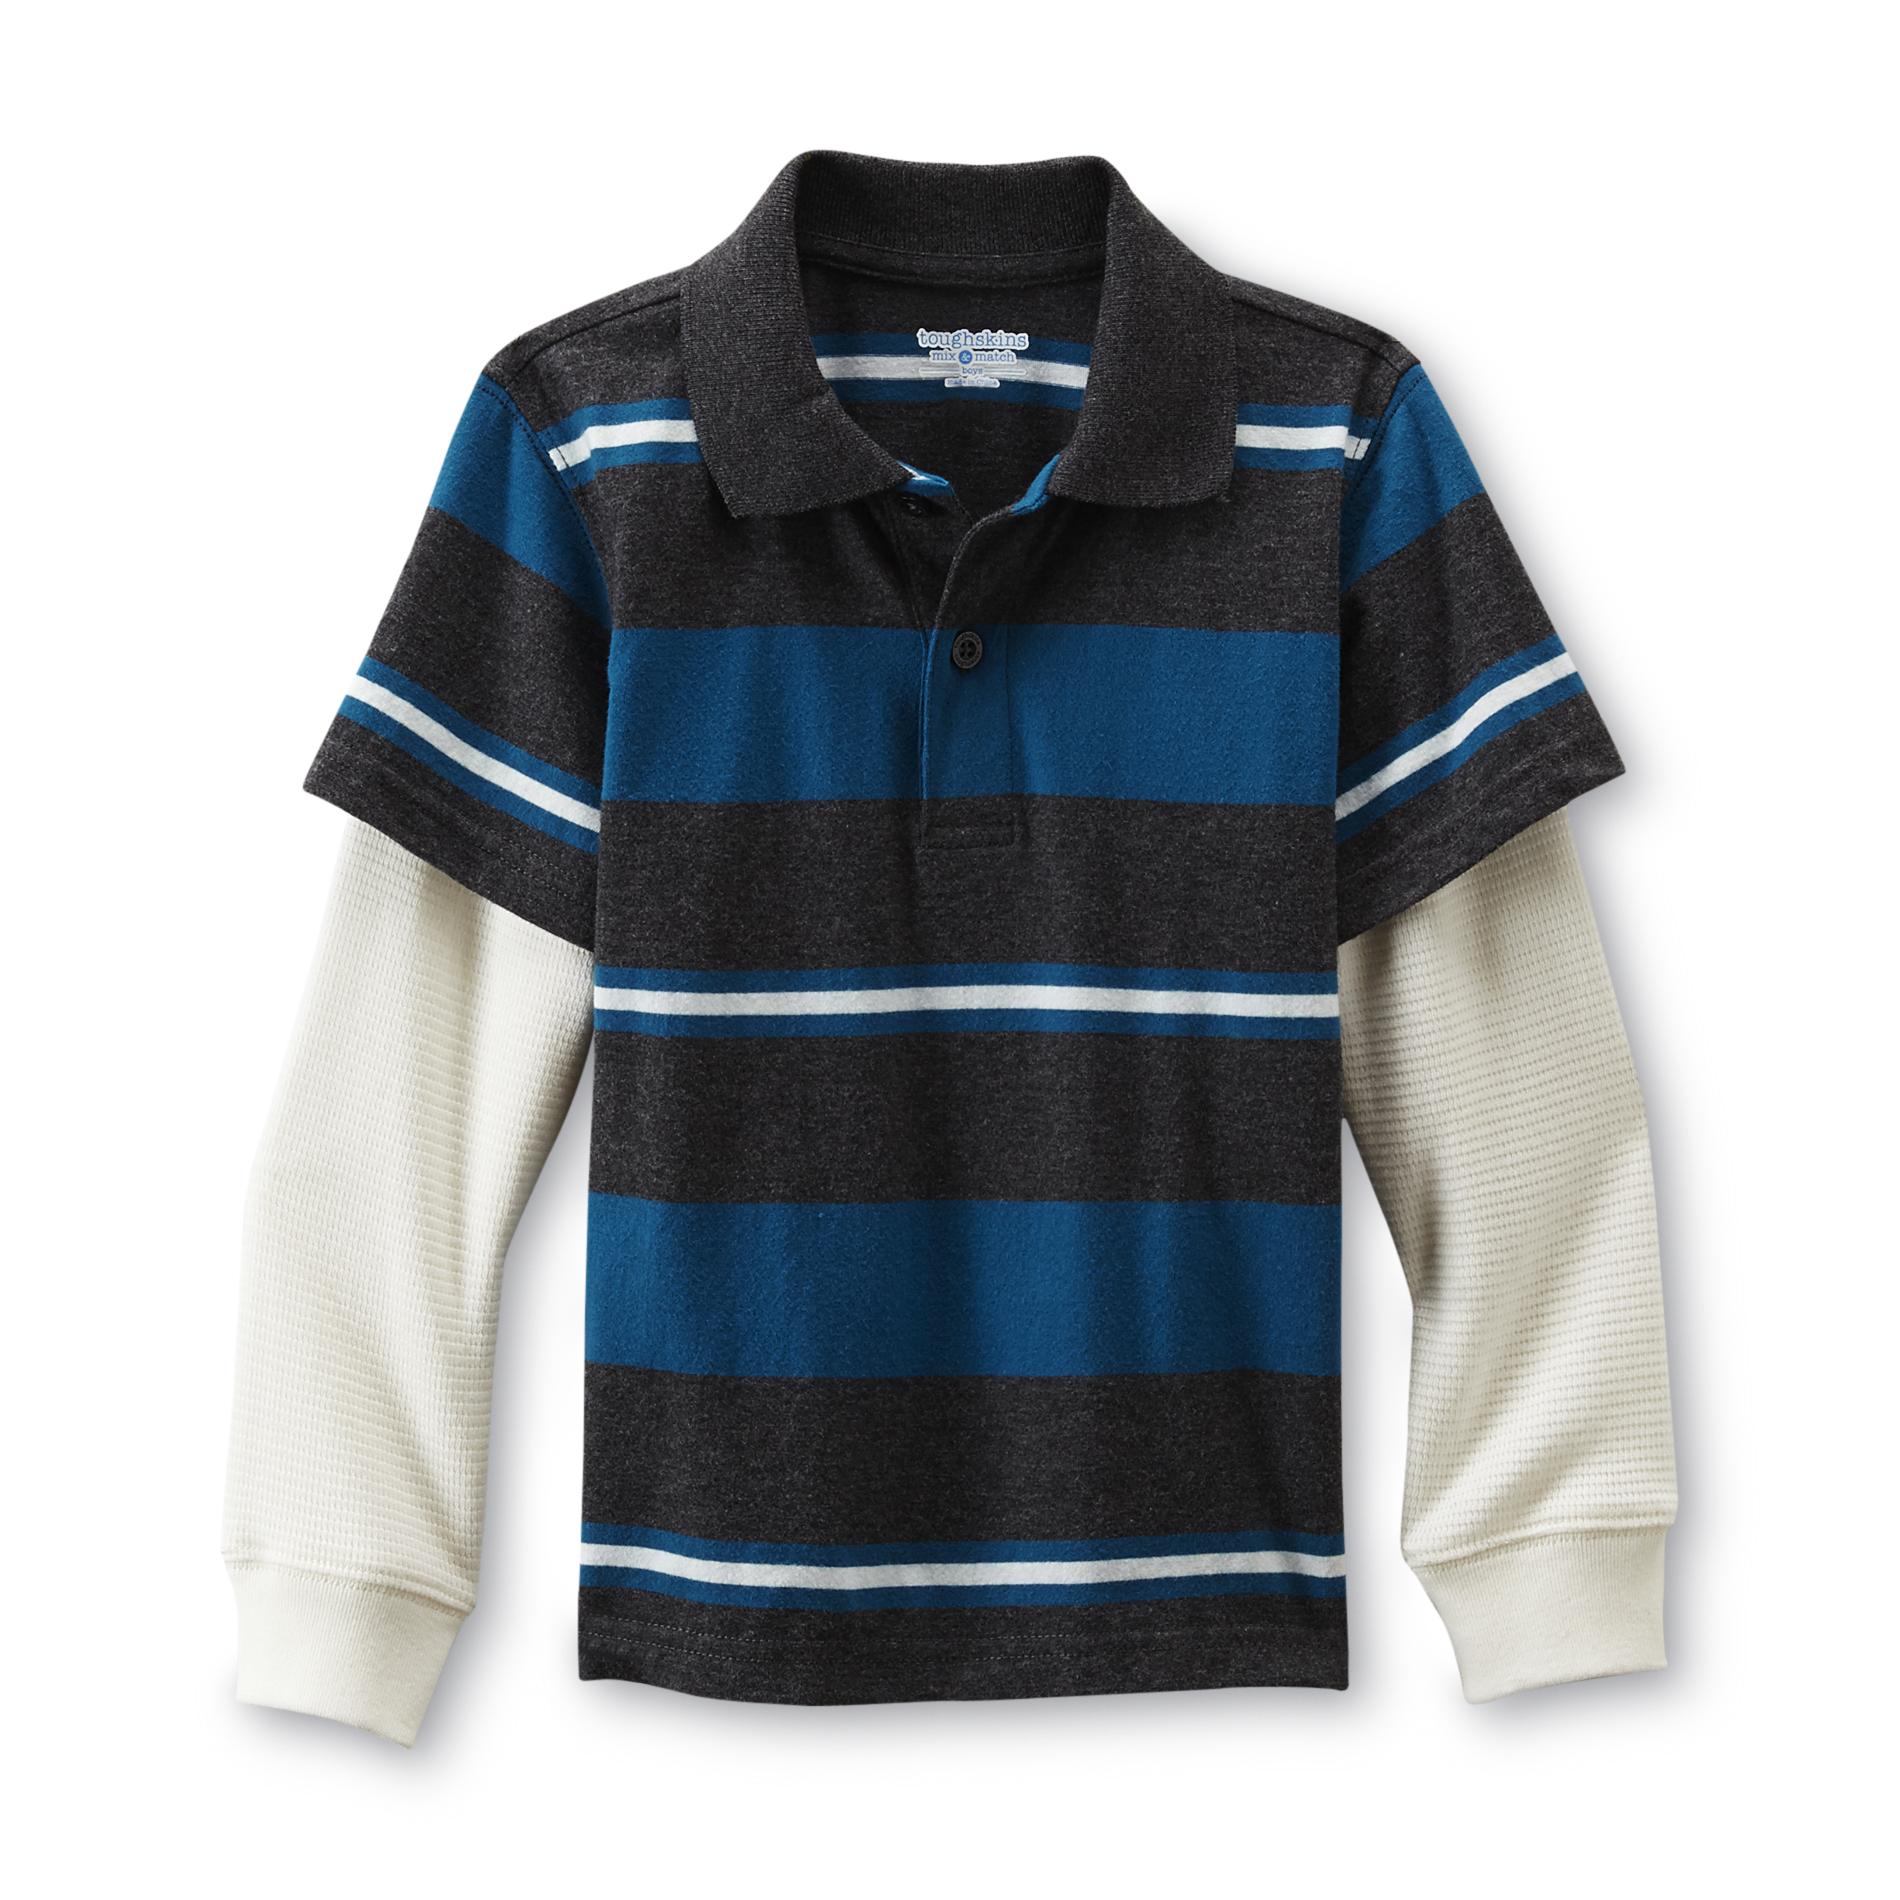 Toughskins Infant & Toddler Boy's Long-Sleeve Polo Shirt - Striped